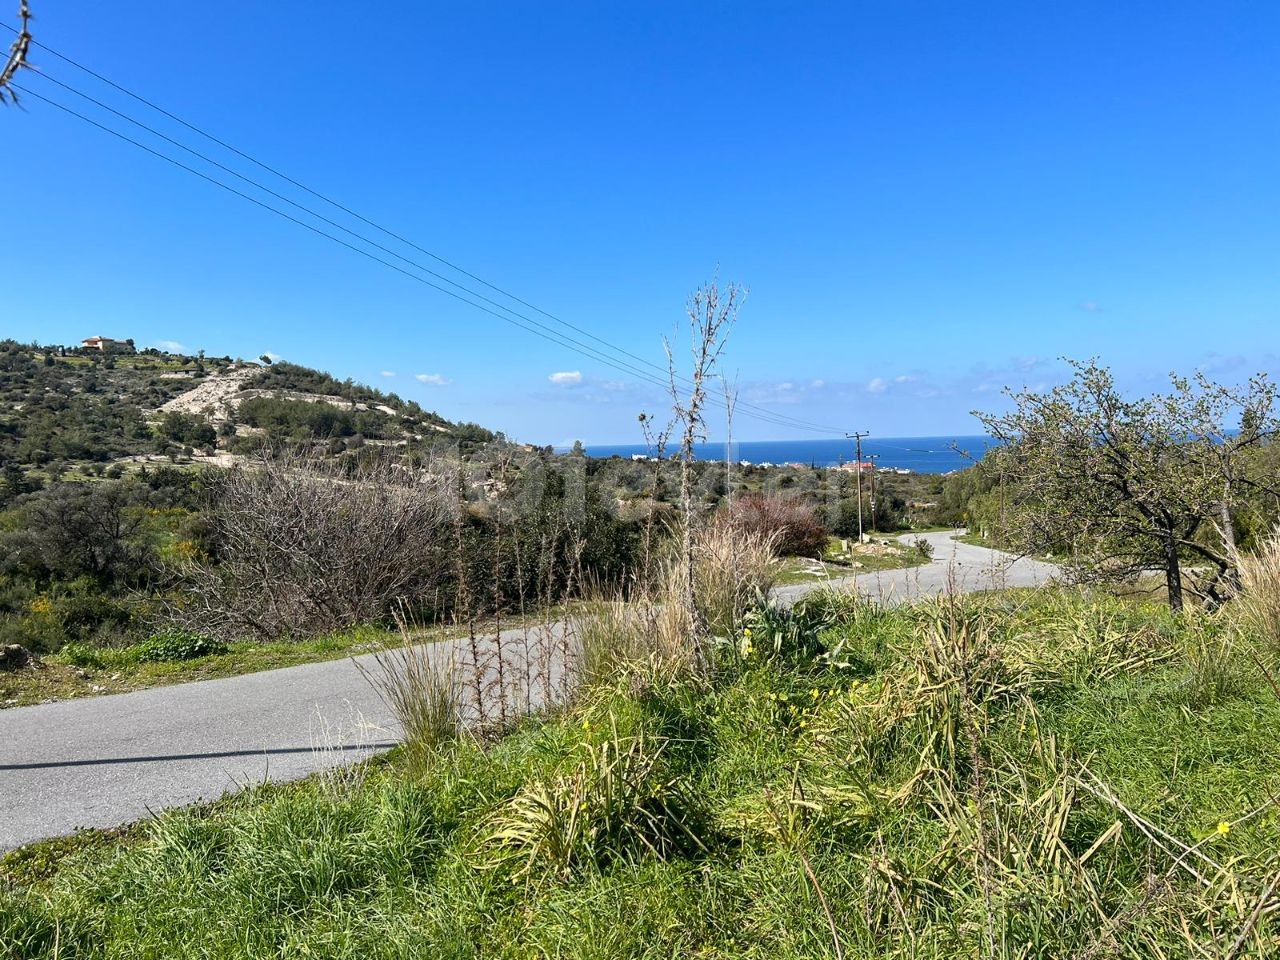 3,5 Hektar Land mit Berg- und Meerblick in Karsiyaka, Kyrenia. 05338403555 ** 